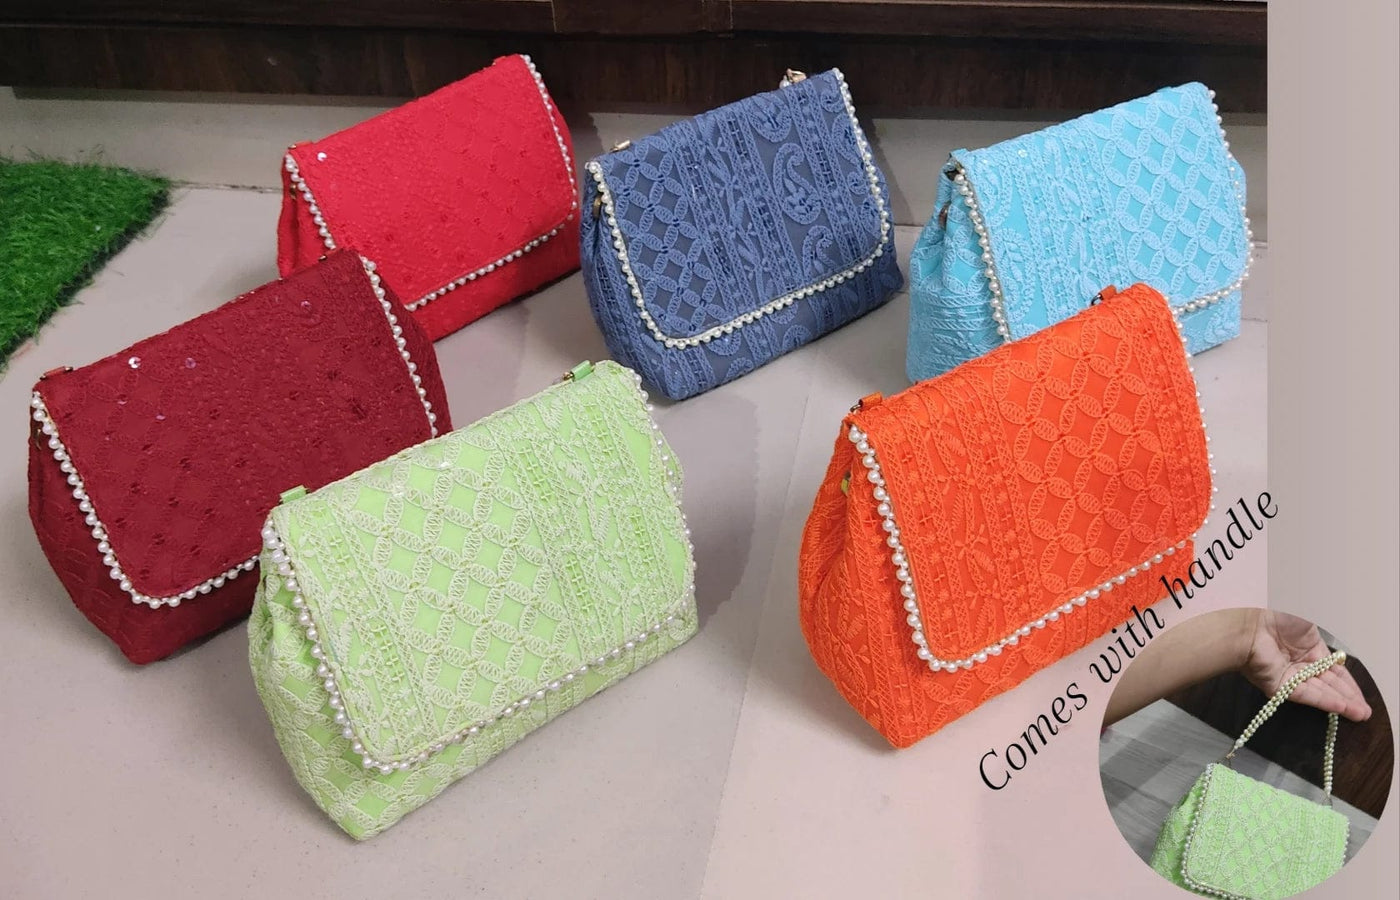 LAMANSH ® Women's Potli Bag LAMANSH® 8*7 inch Lucknowi Chikankari work hand bags for women / Best gift 🎁 option too